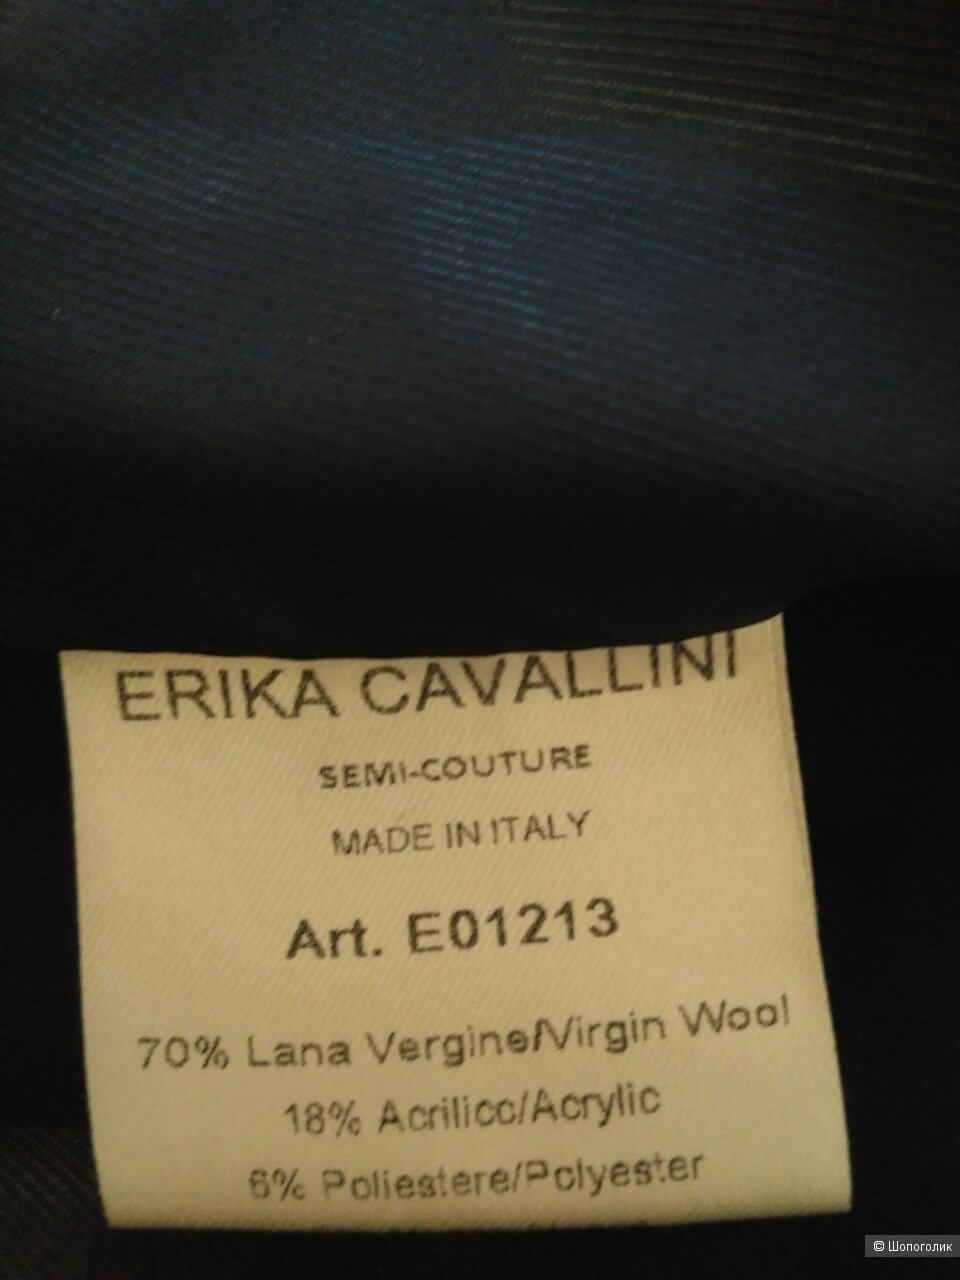 Полупальто Erika Cavallini Semi-Couture, it. 40 (42)